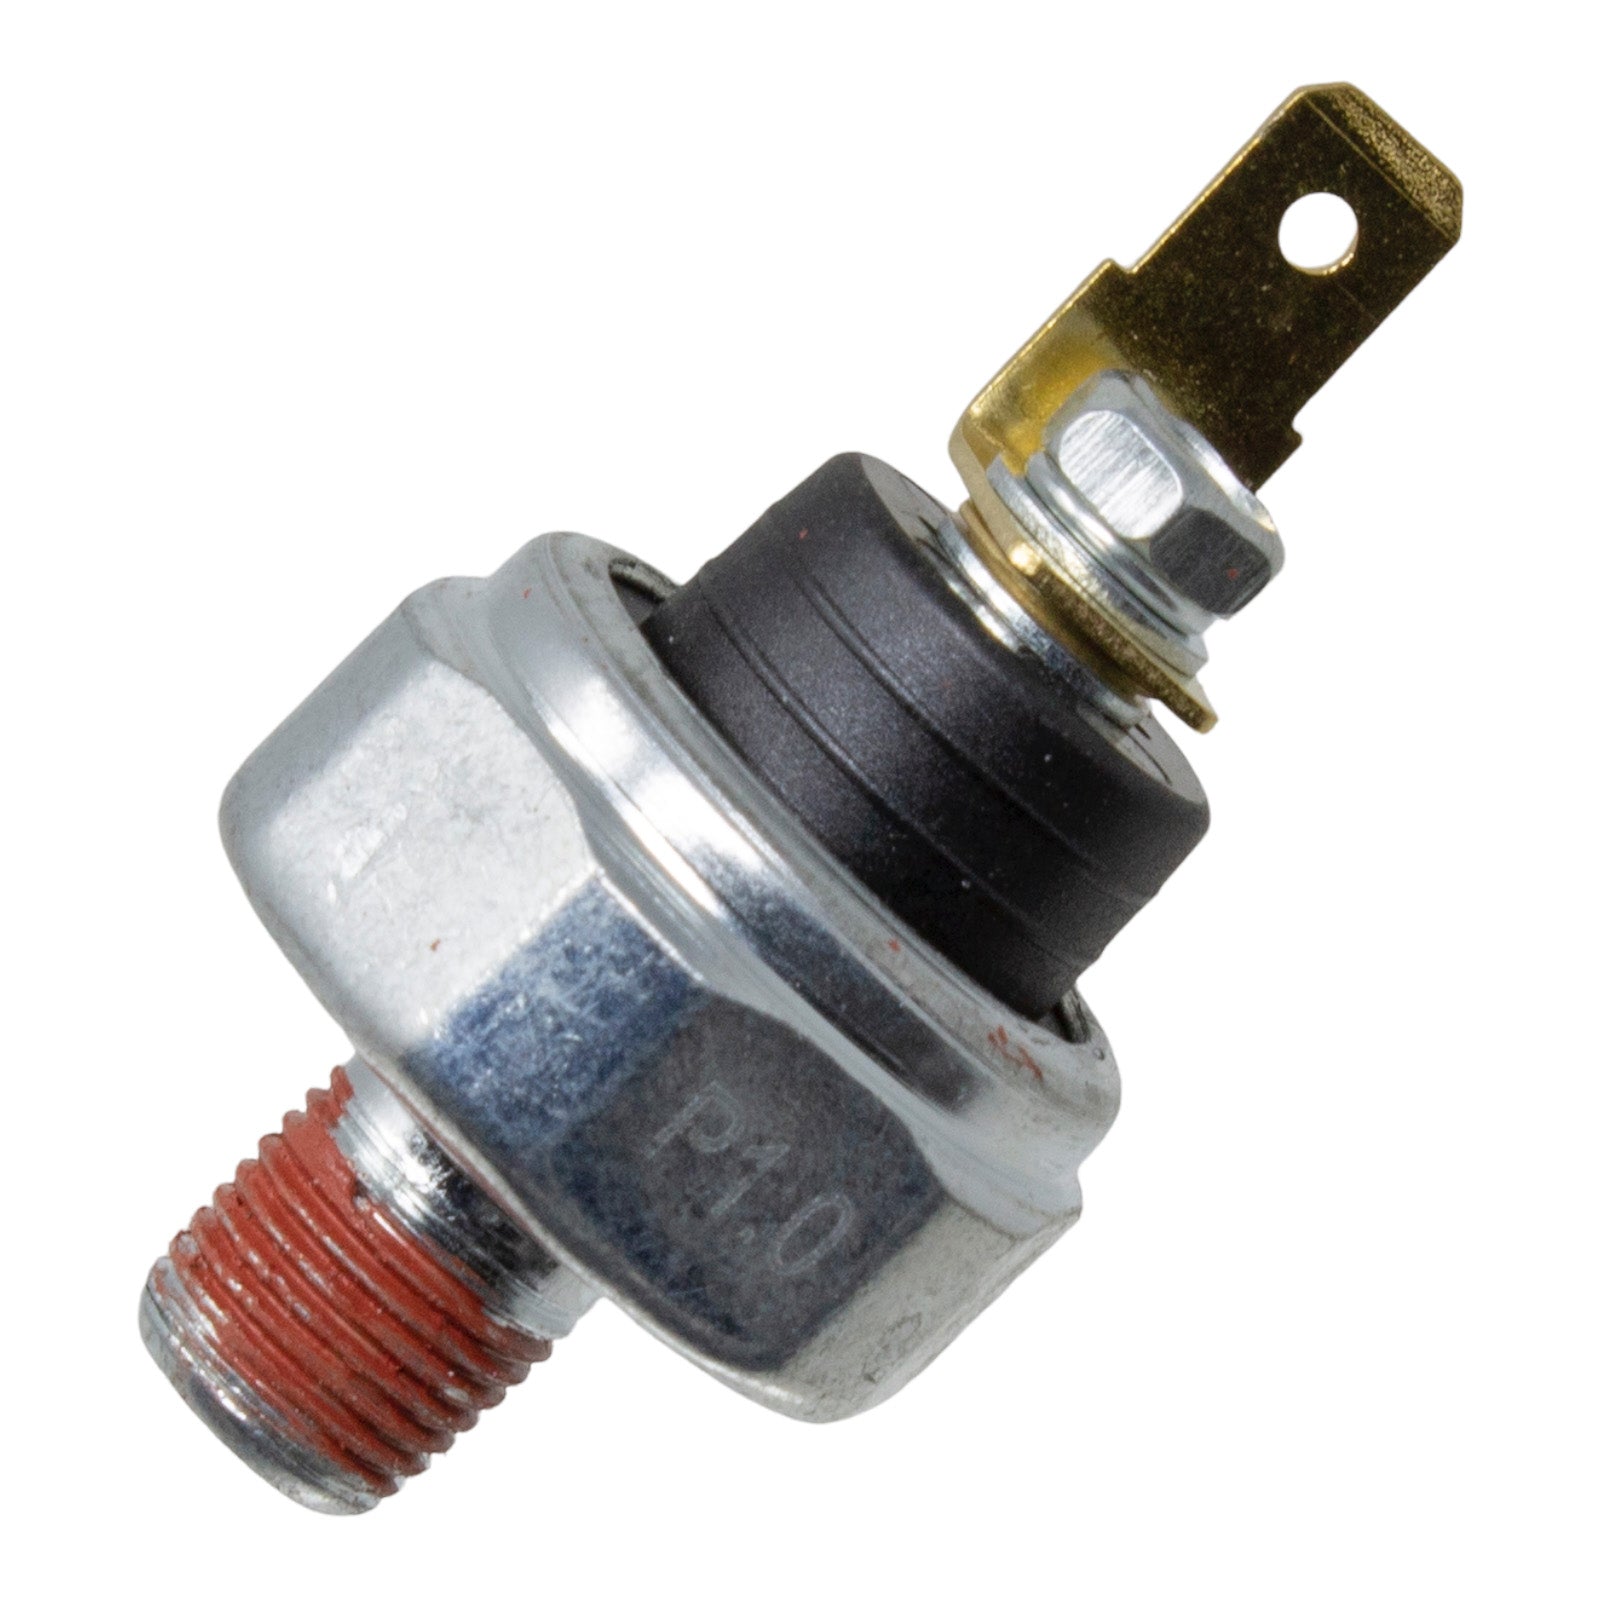 Duraforce 377-6965, Oil Pressure Switch For Caterpillar